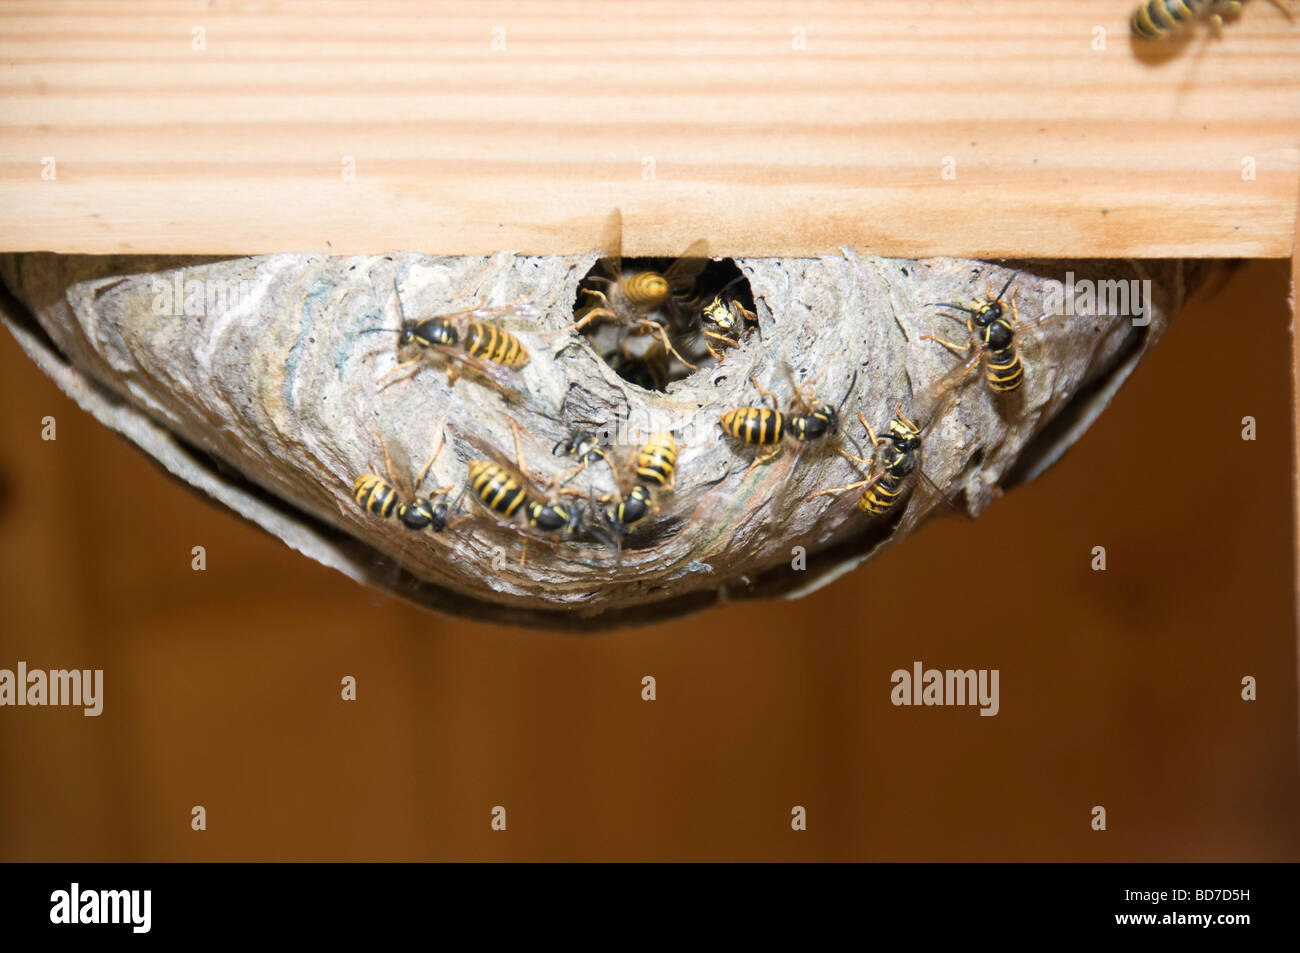 Wespennest mit Wespen Nest in Schuppen Tür Reparatur Stockfoto